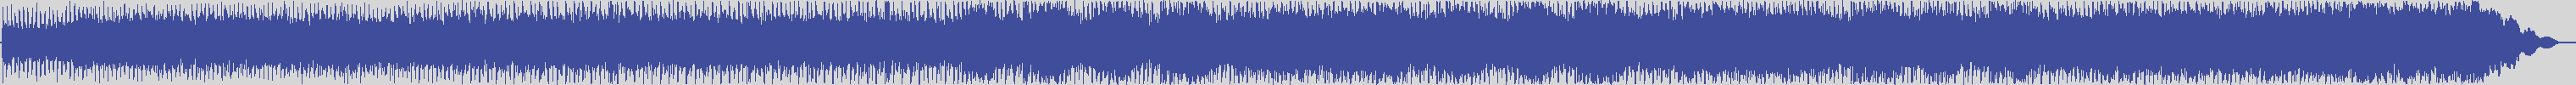 upr [UPR074] Container 47 - Purpose [Original Mix] audio wave form